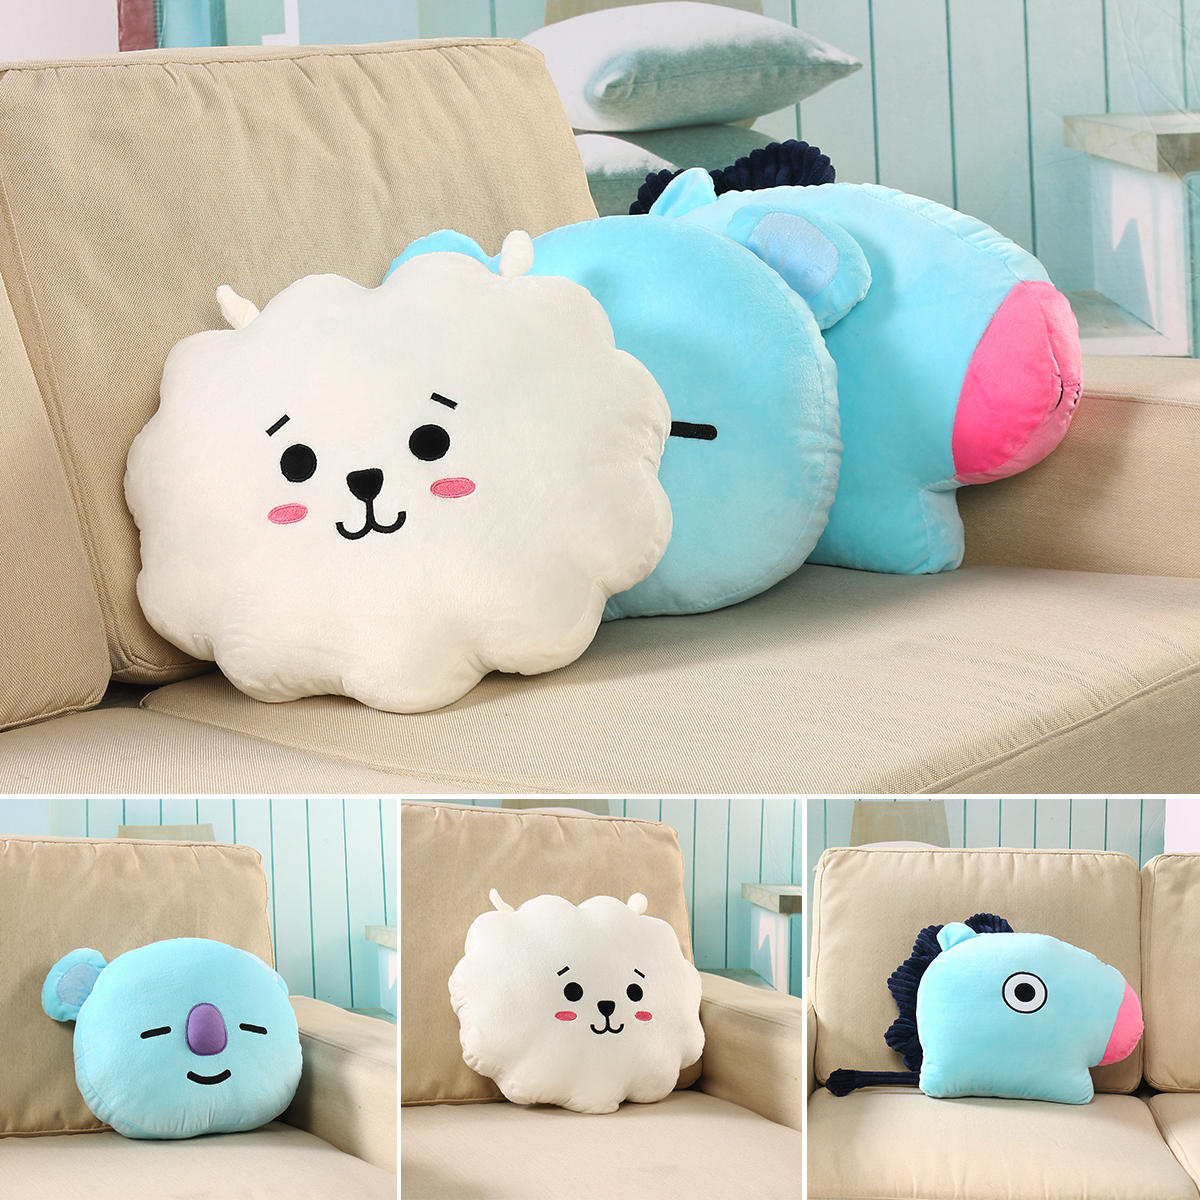 New Cute Plush Toy Soft Cushion Pillow For BT21 Bangtan Boys BTS Star Universe